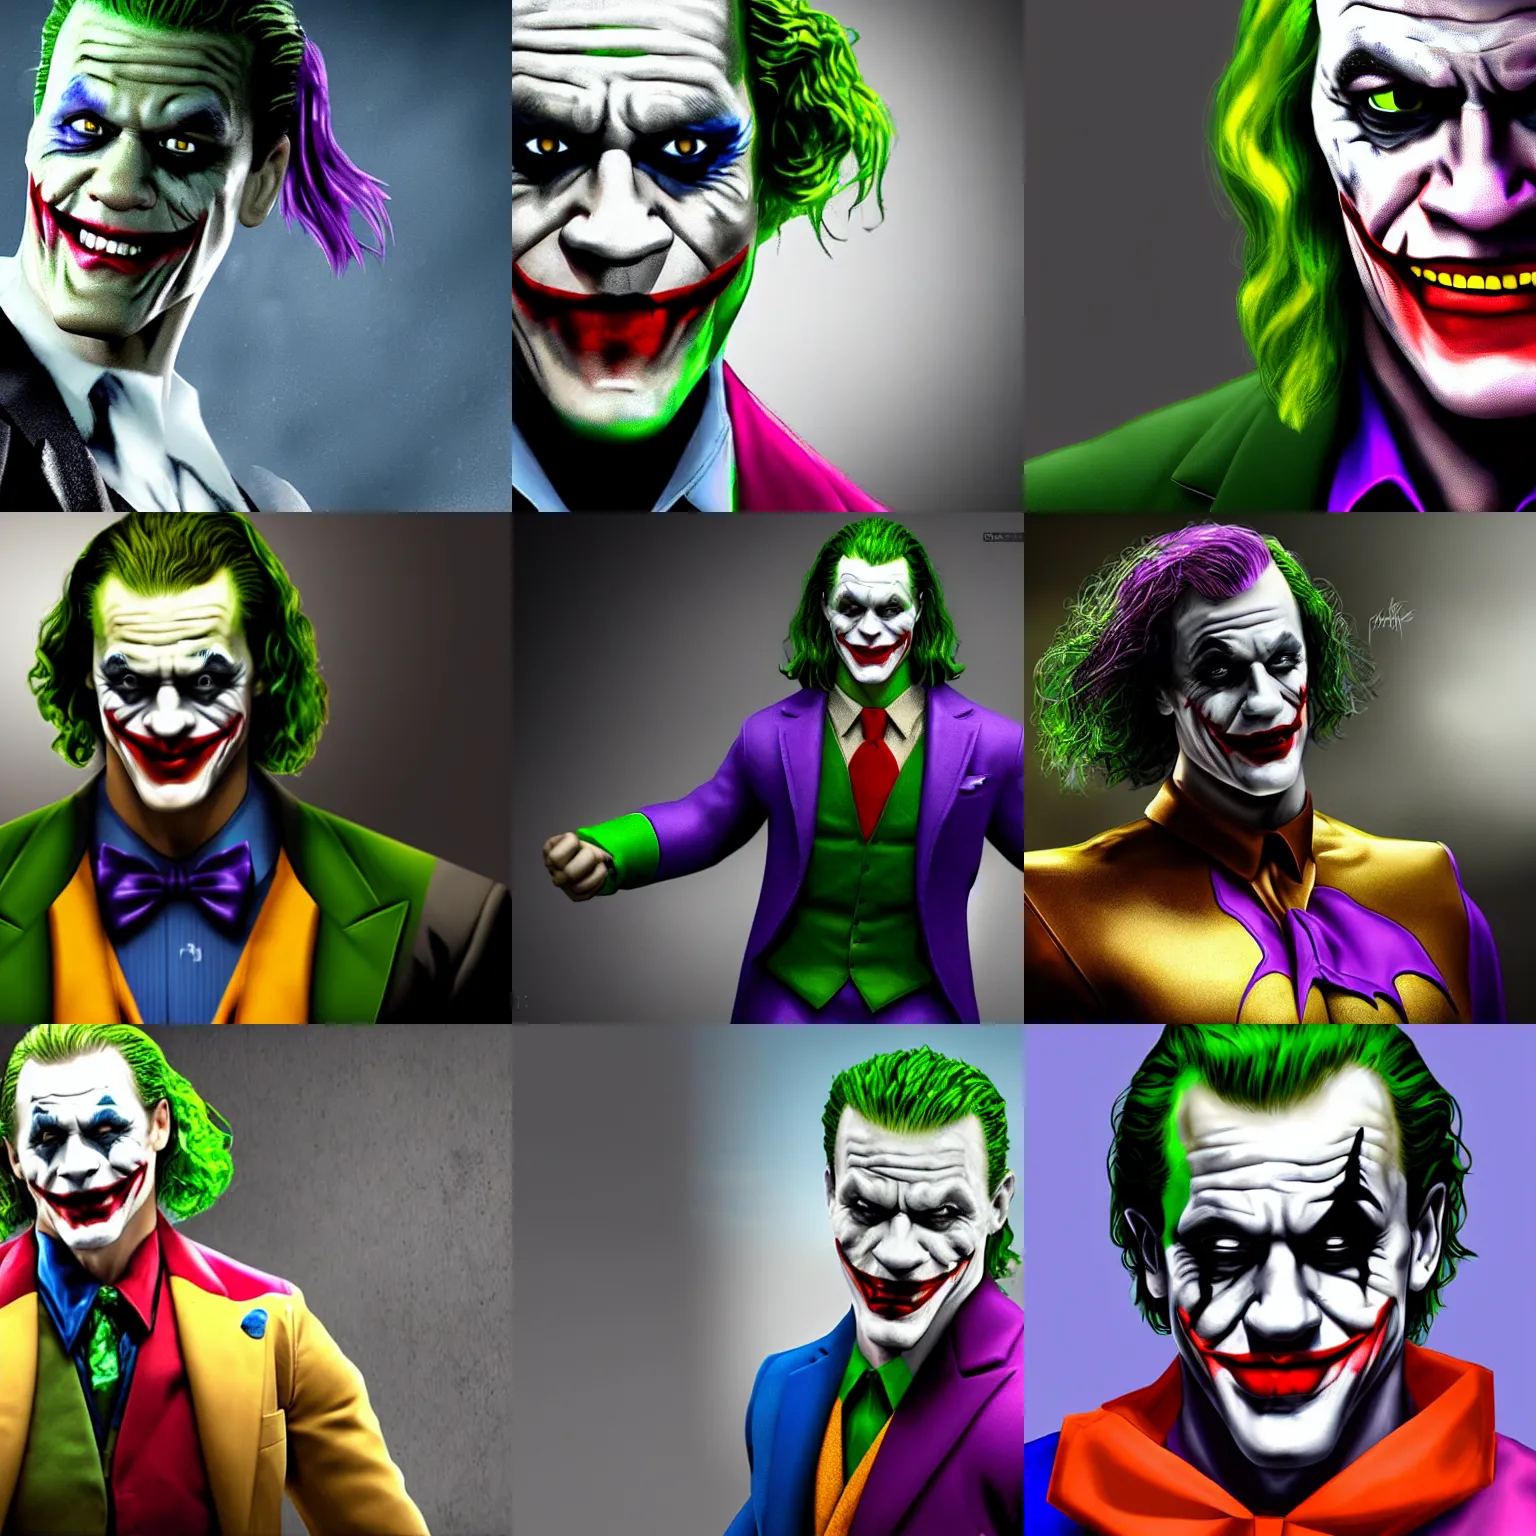 John Cena playing as the Joker, realism, 4k | Stable Diffusion | OpenArt